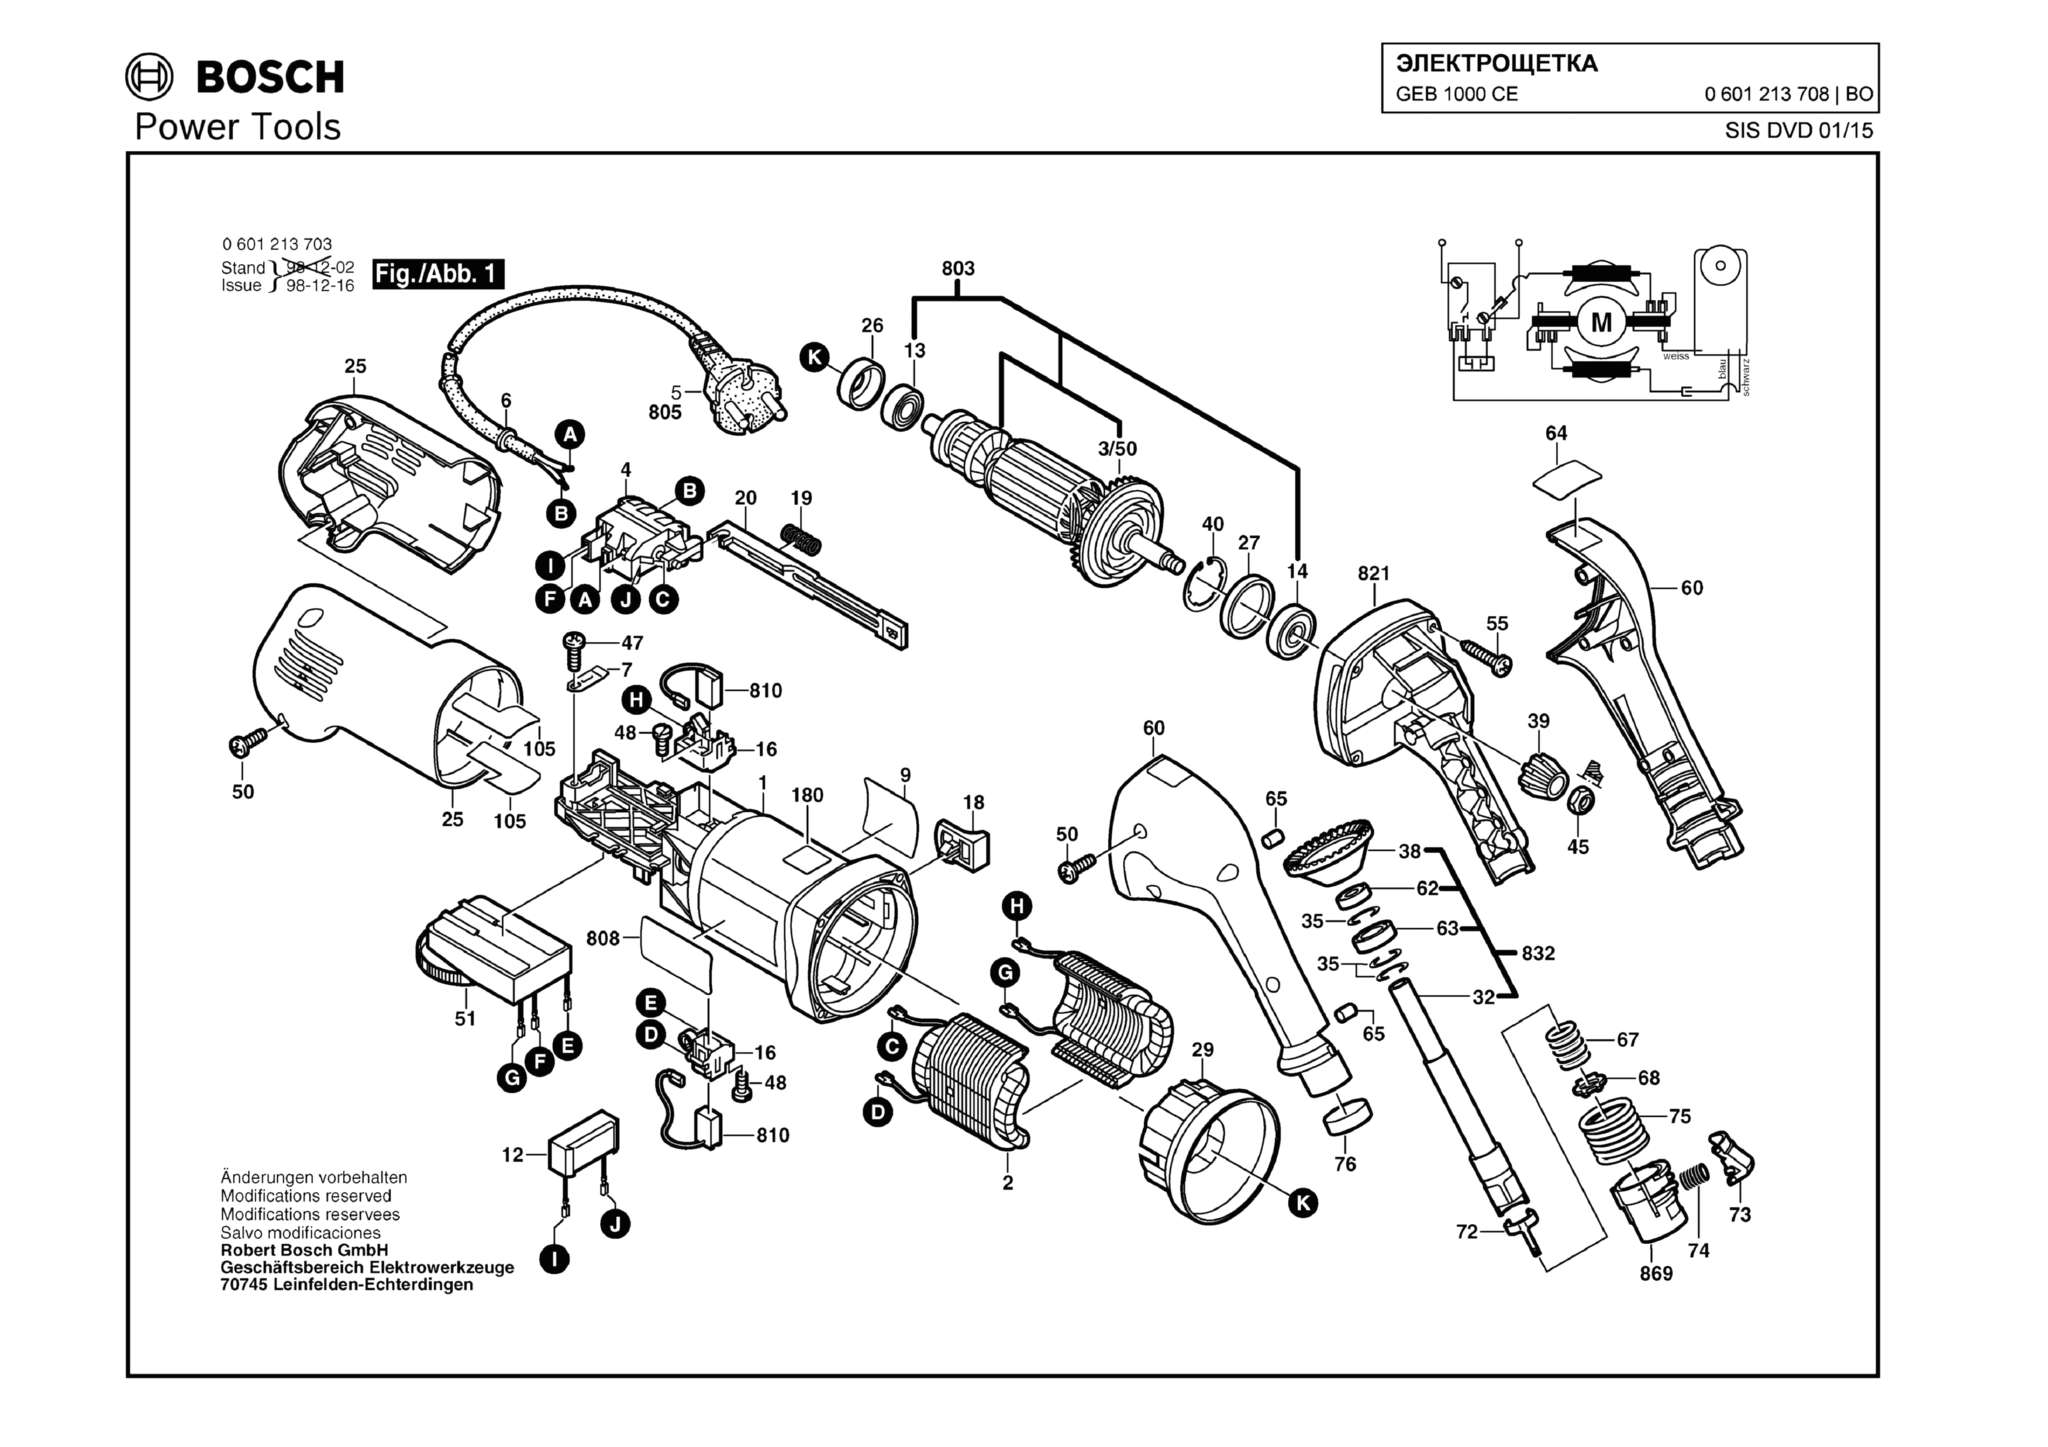 Запчасти, схема и деталировка Bosch GEB 1000 CE (ТИП 0601213708)